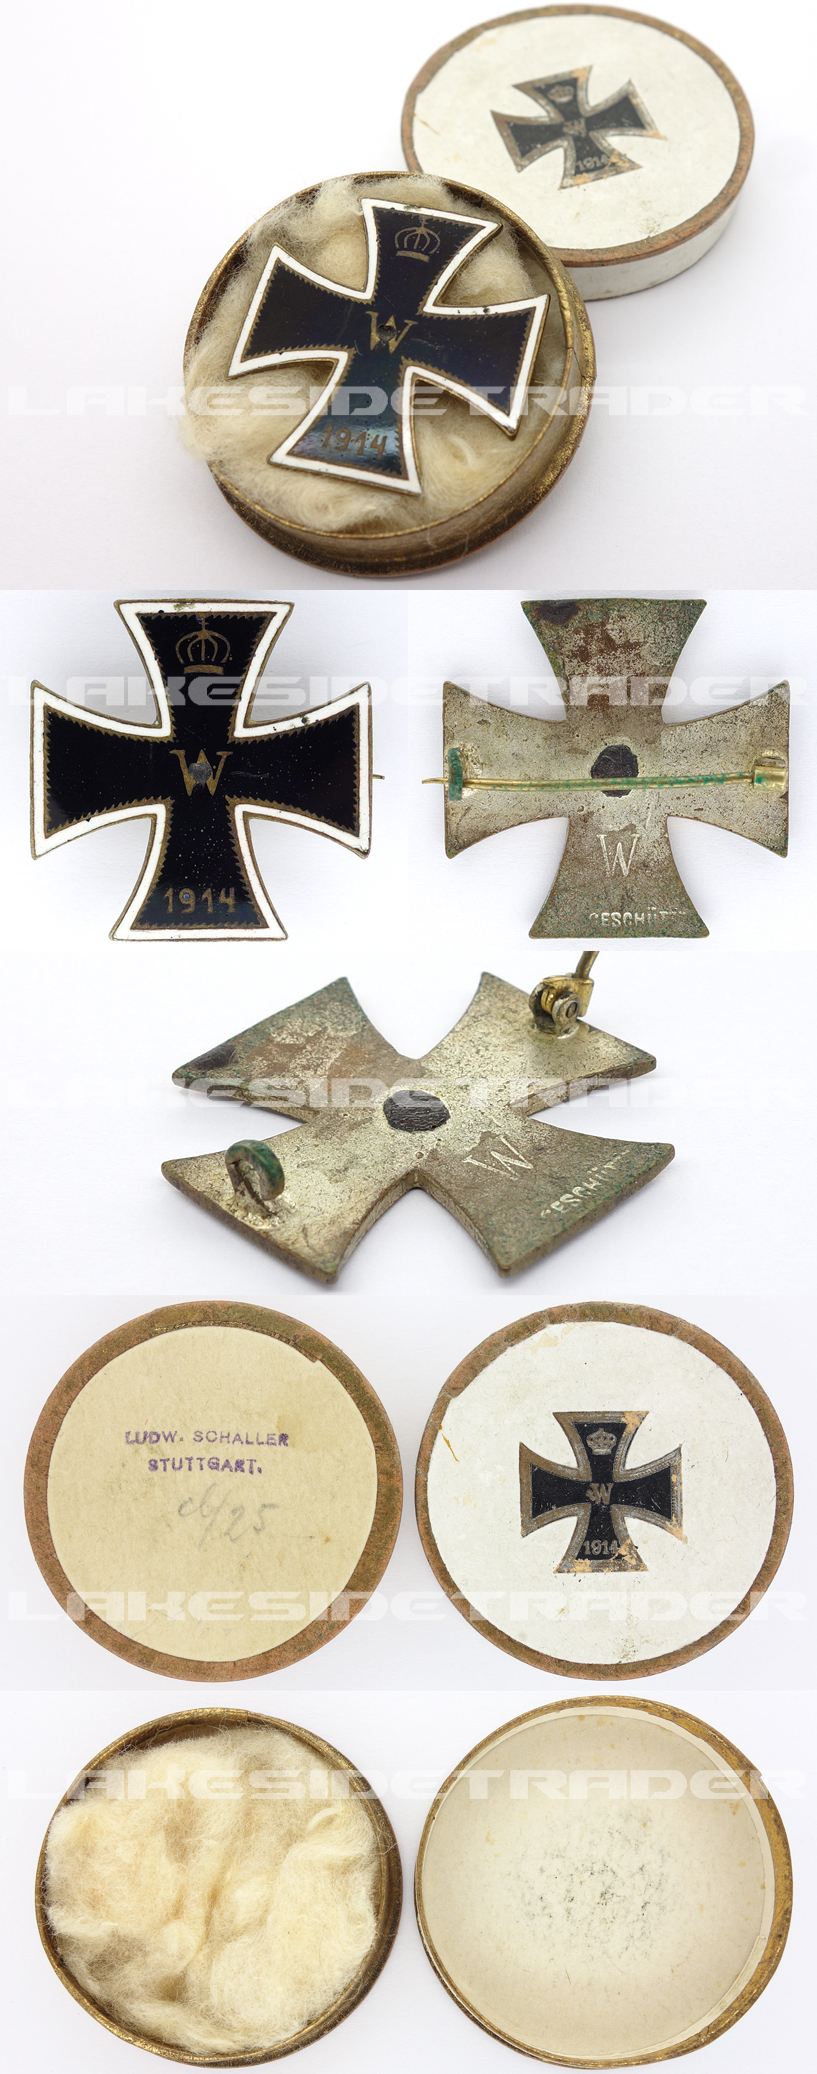 Cased Imperial 1st Class Iron Cross Enamel Pin